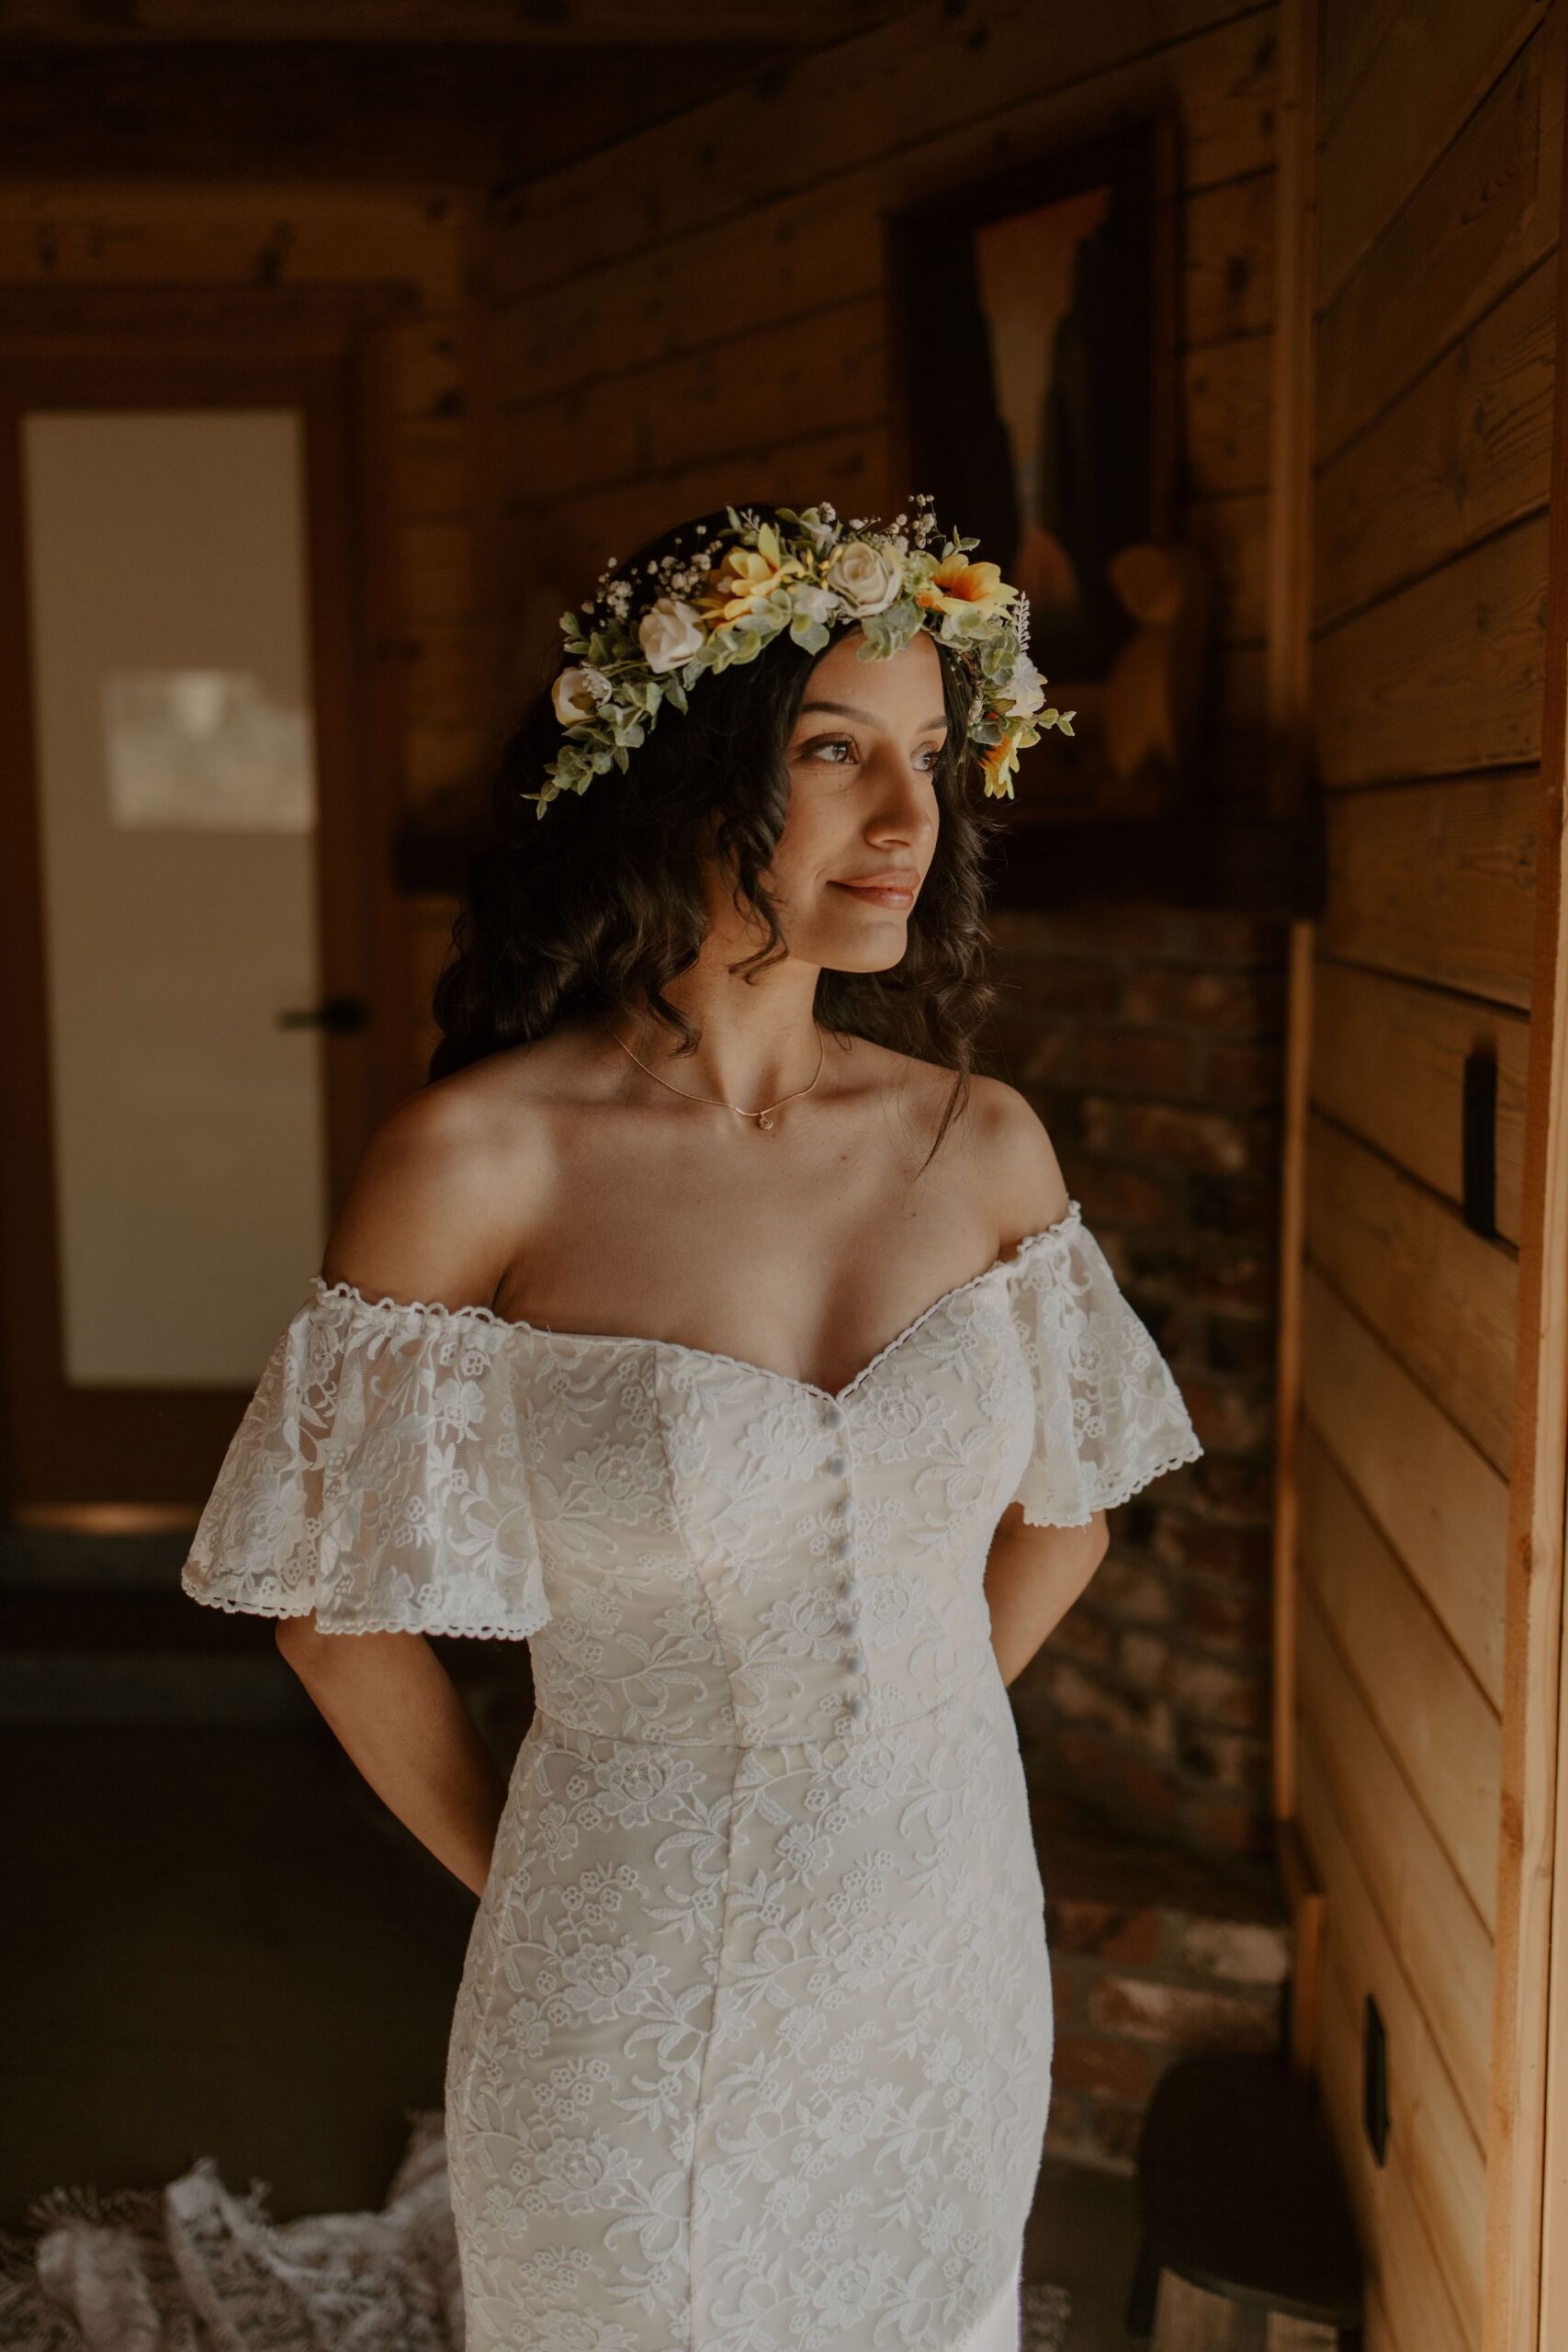 Choosing-your-perfect-wedding-dress-as-a-boho-bride